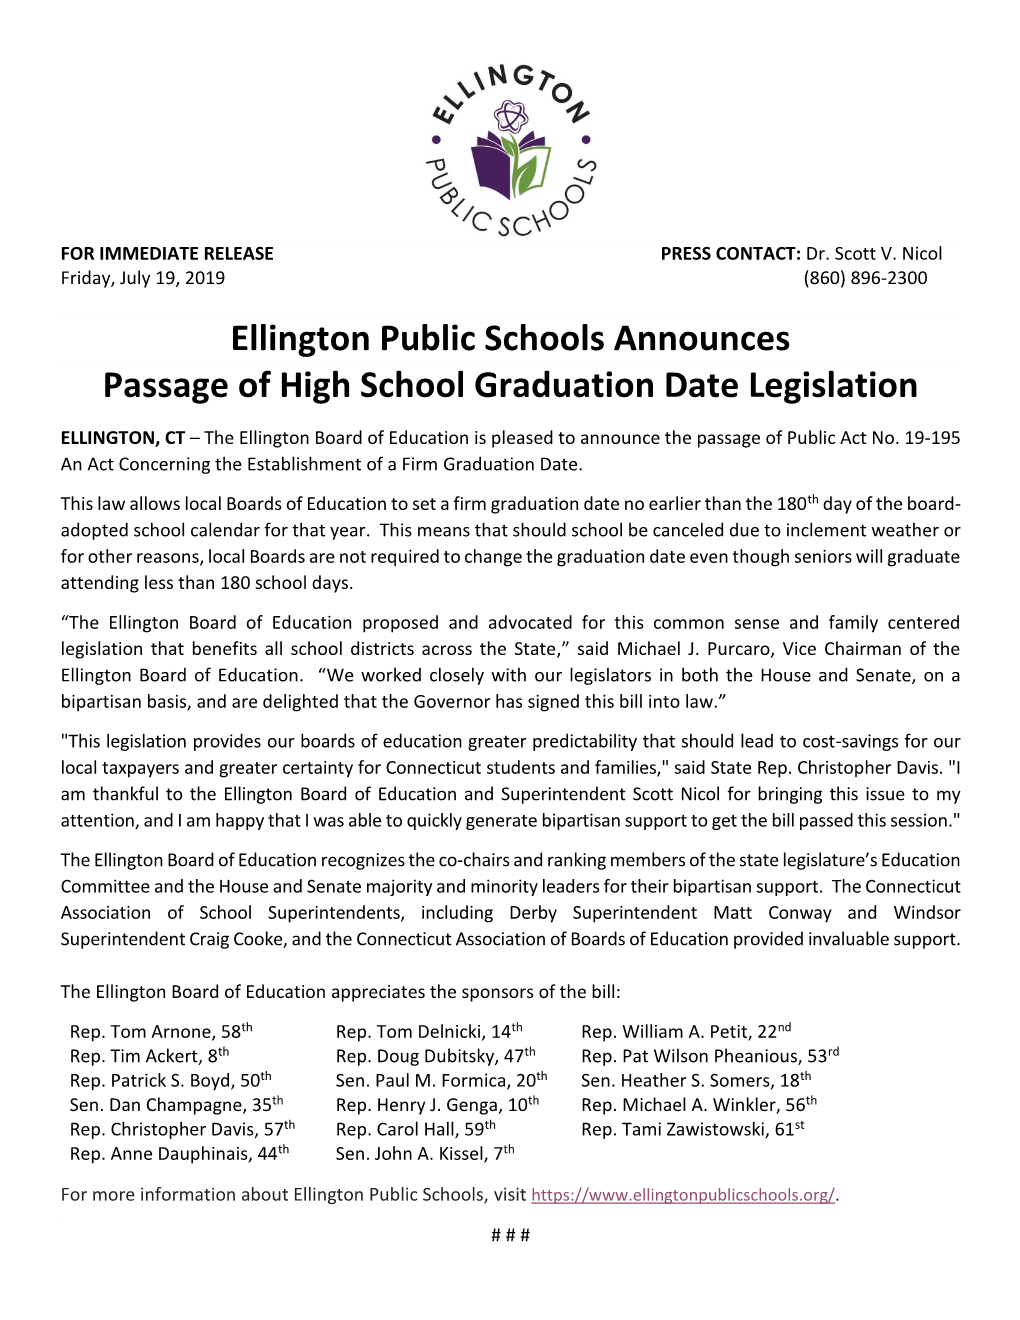 Ellington Public Schools Announces Passage of High School Graduation Date Legislation